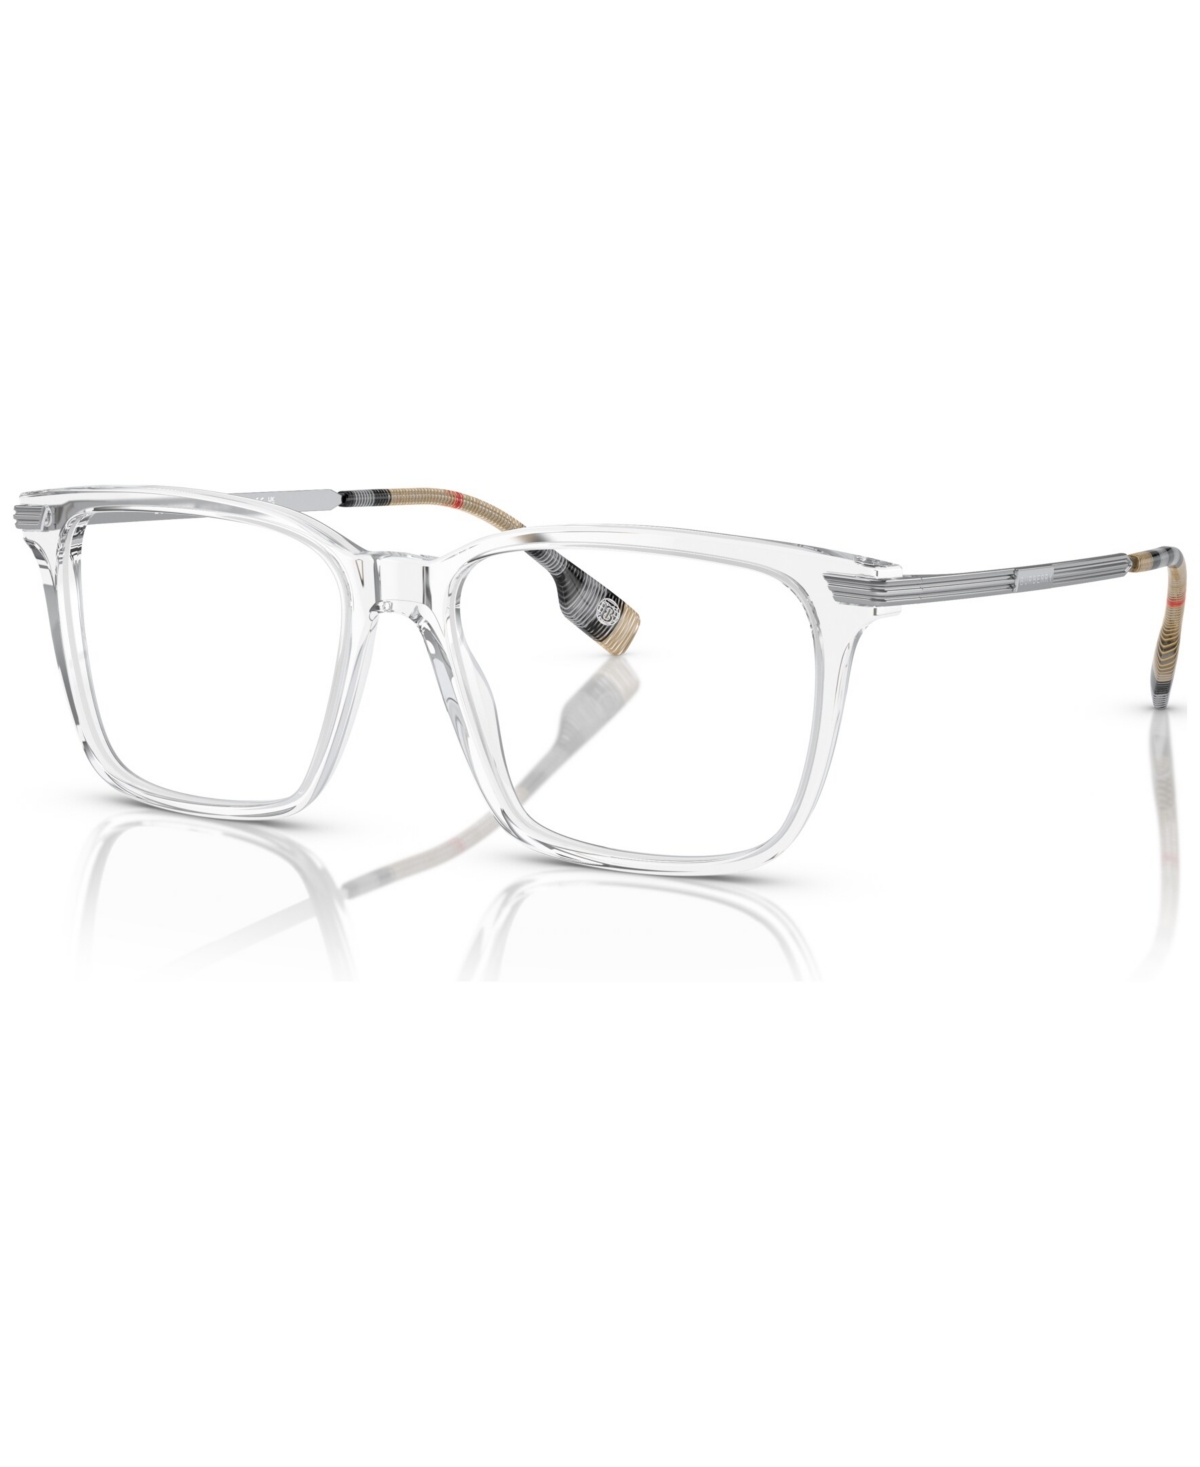 Men's Square Eyeglasses, BE2378 55 - Transparent